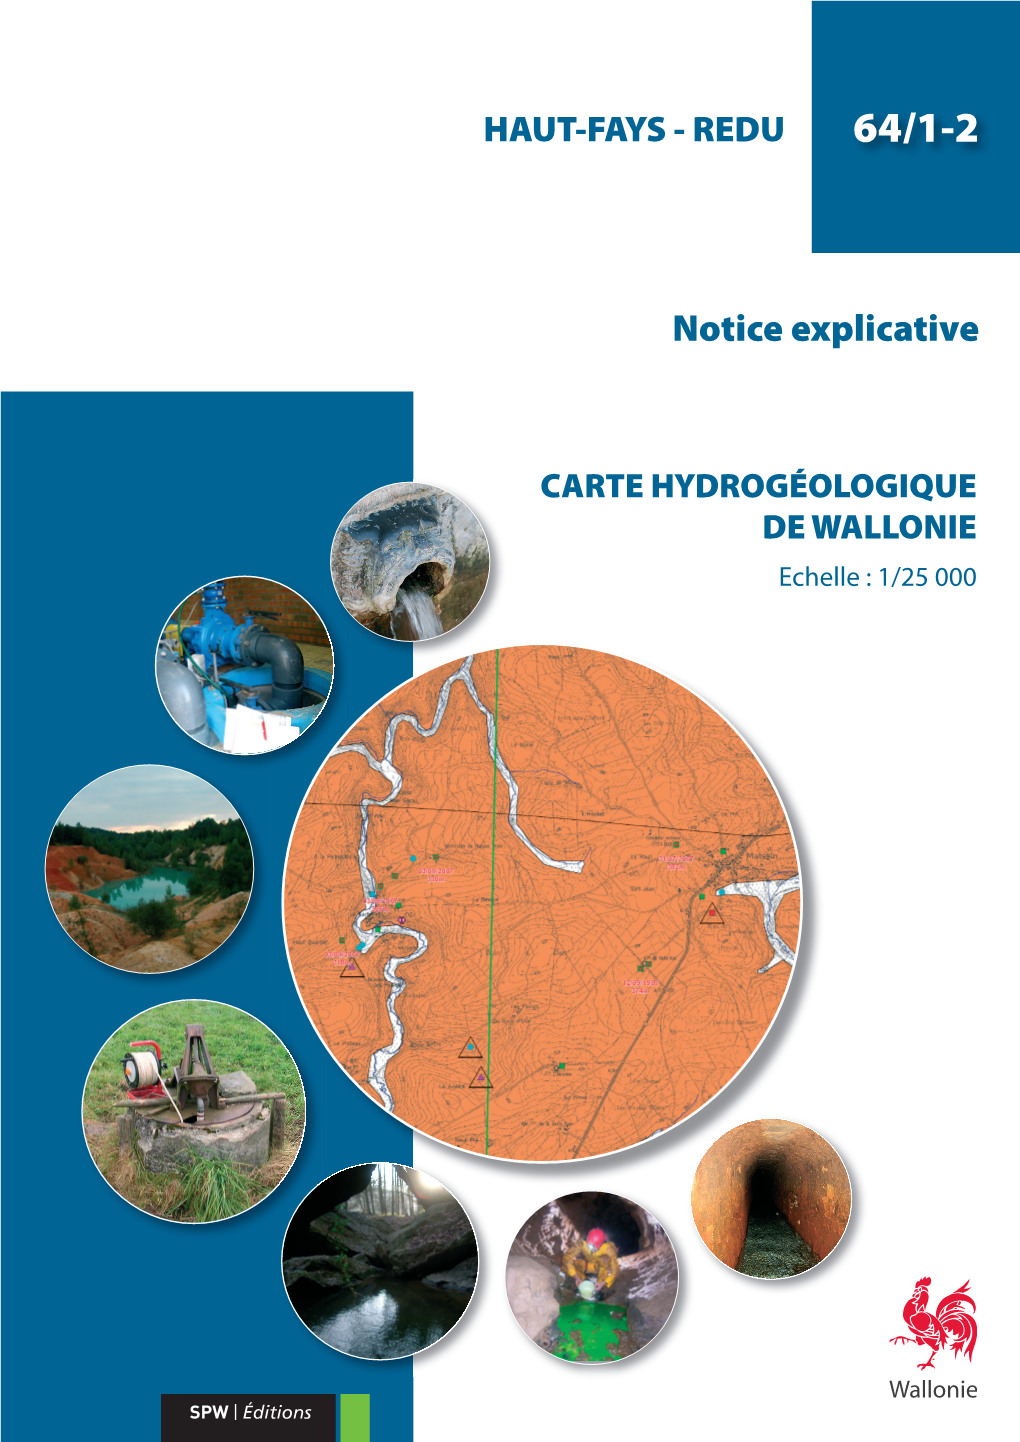 Carte Hydrogéologique De Haut-Fays - Redu HAUT-FAYS - REDU